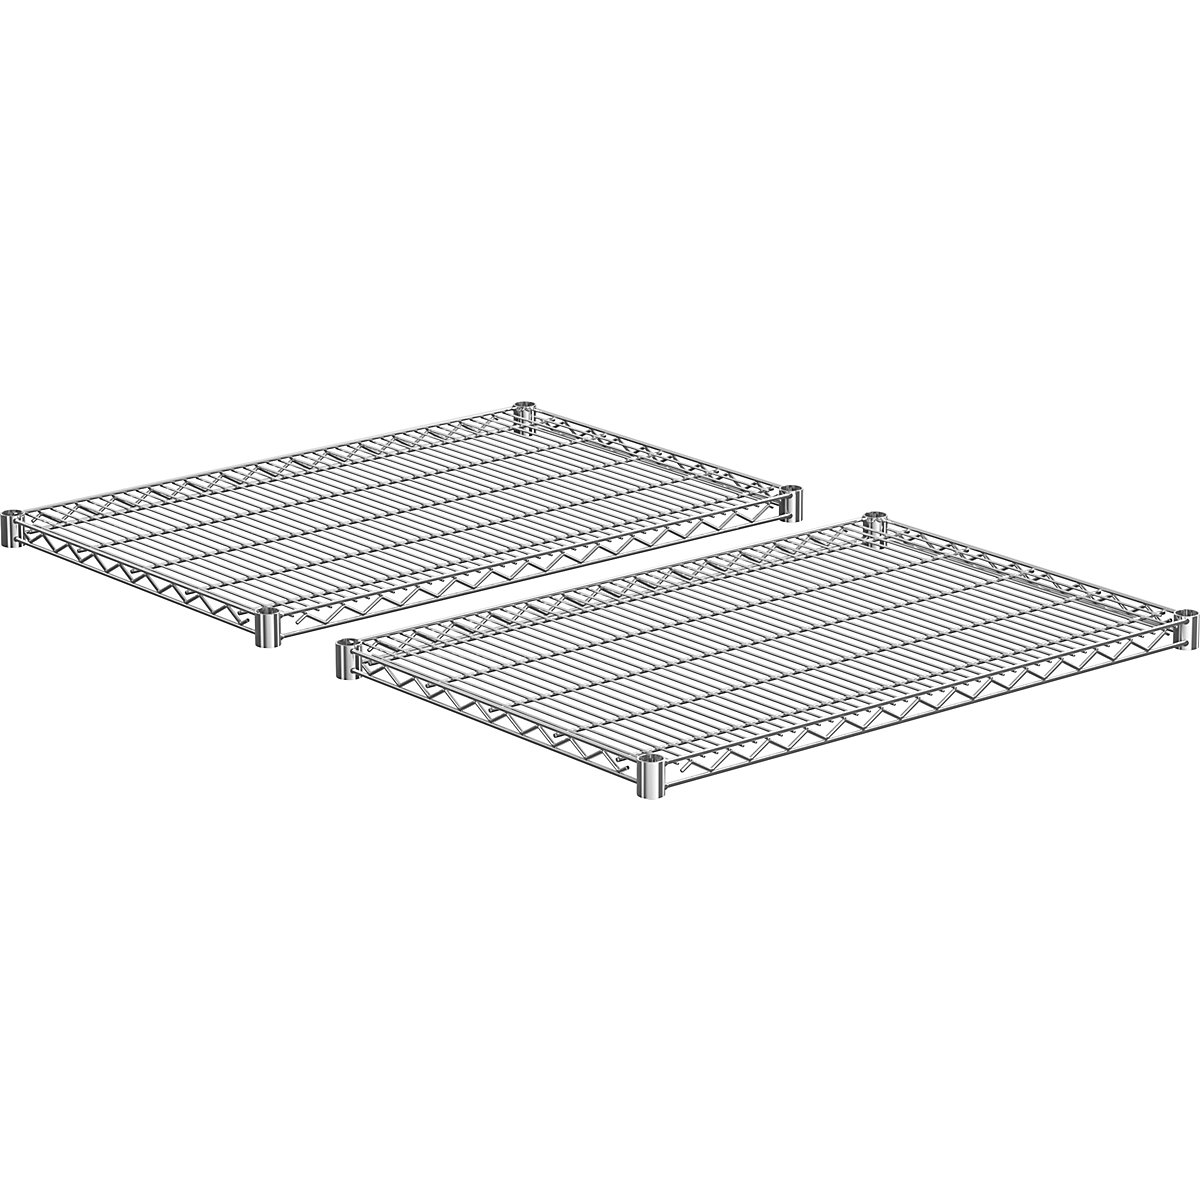 Shelf for steel mesh shelf unit, chrome plated, max. shelf load 150 kg, width 910 mm, depth 610 mm, pack of 2